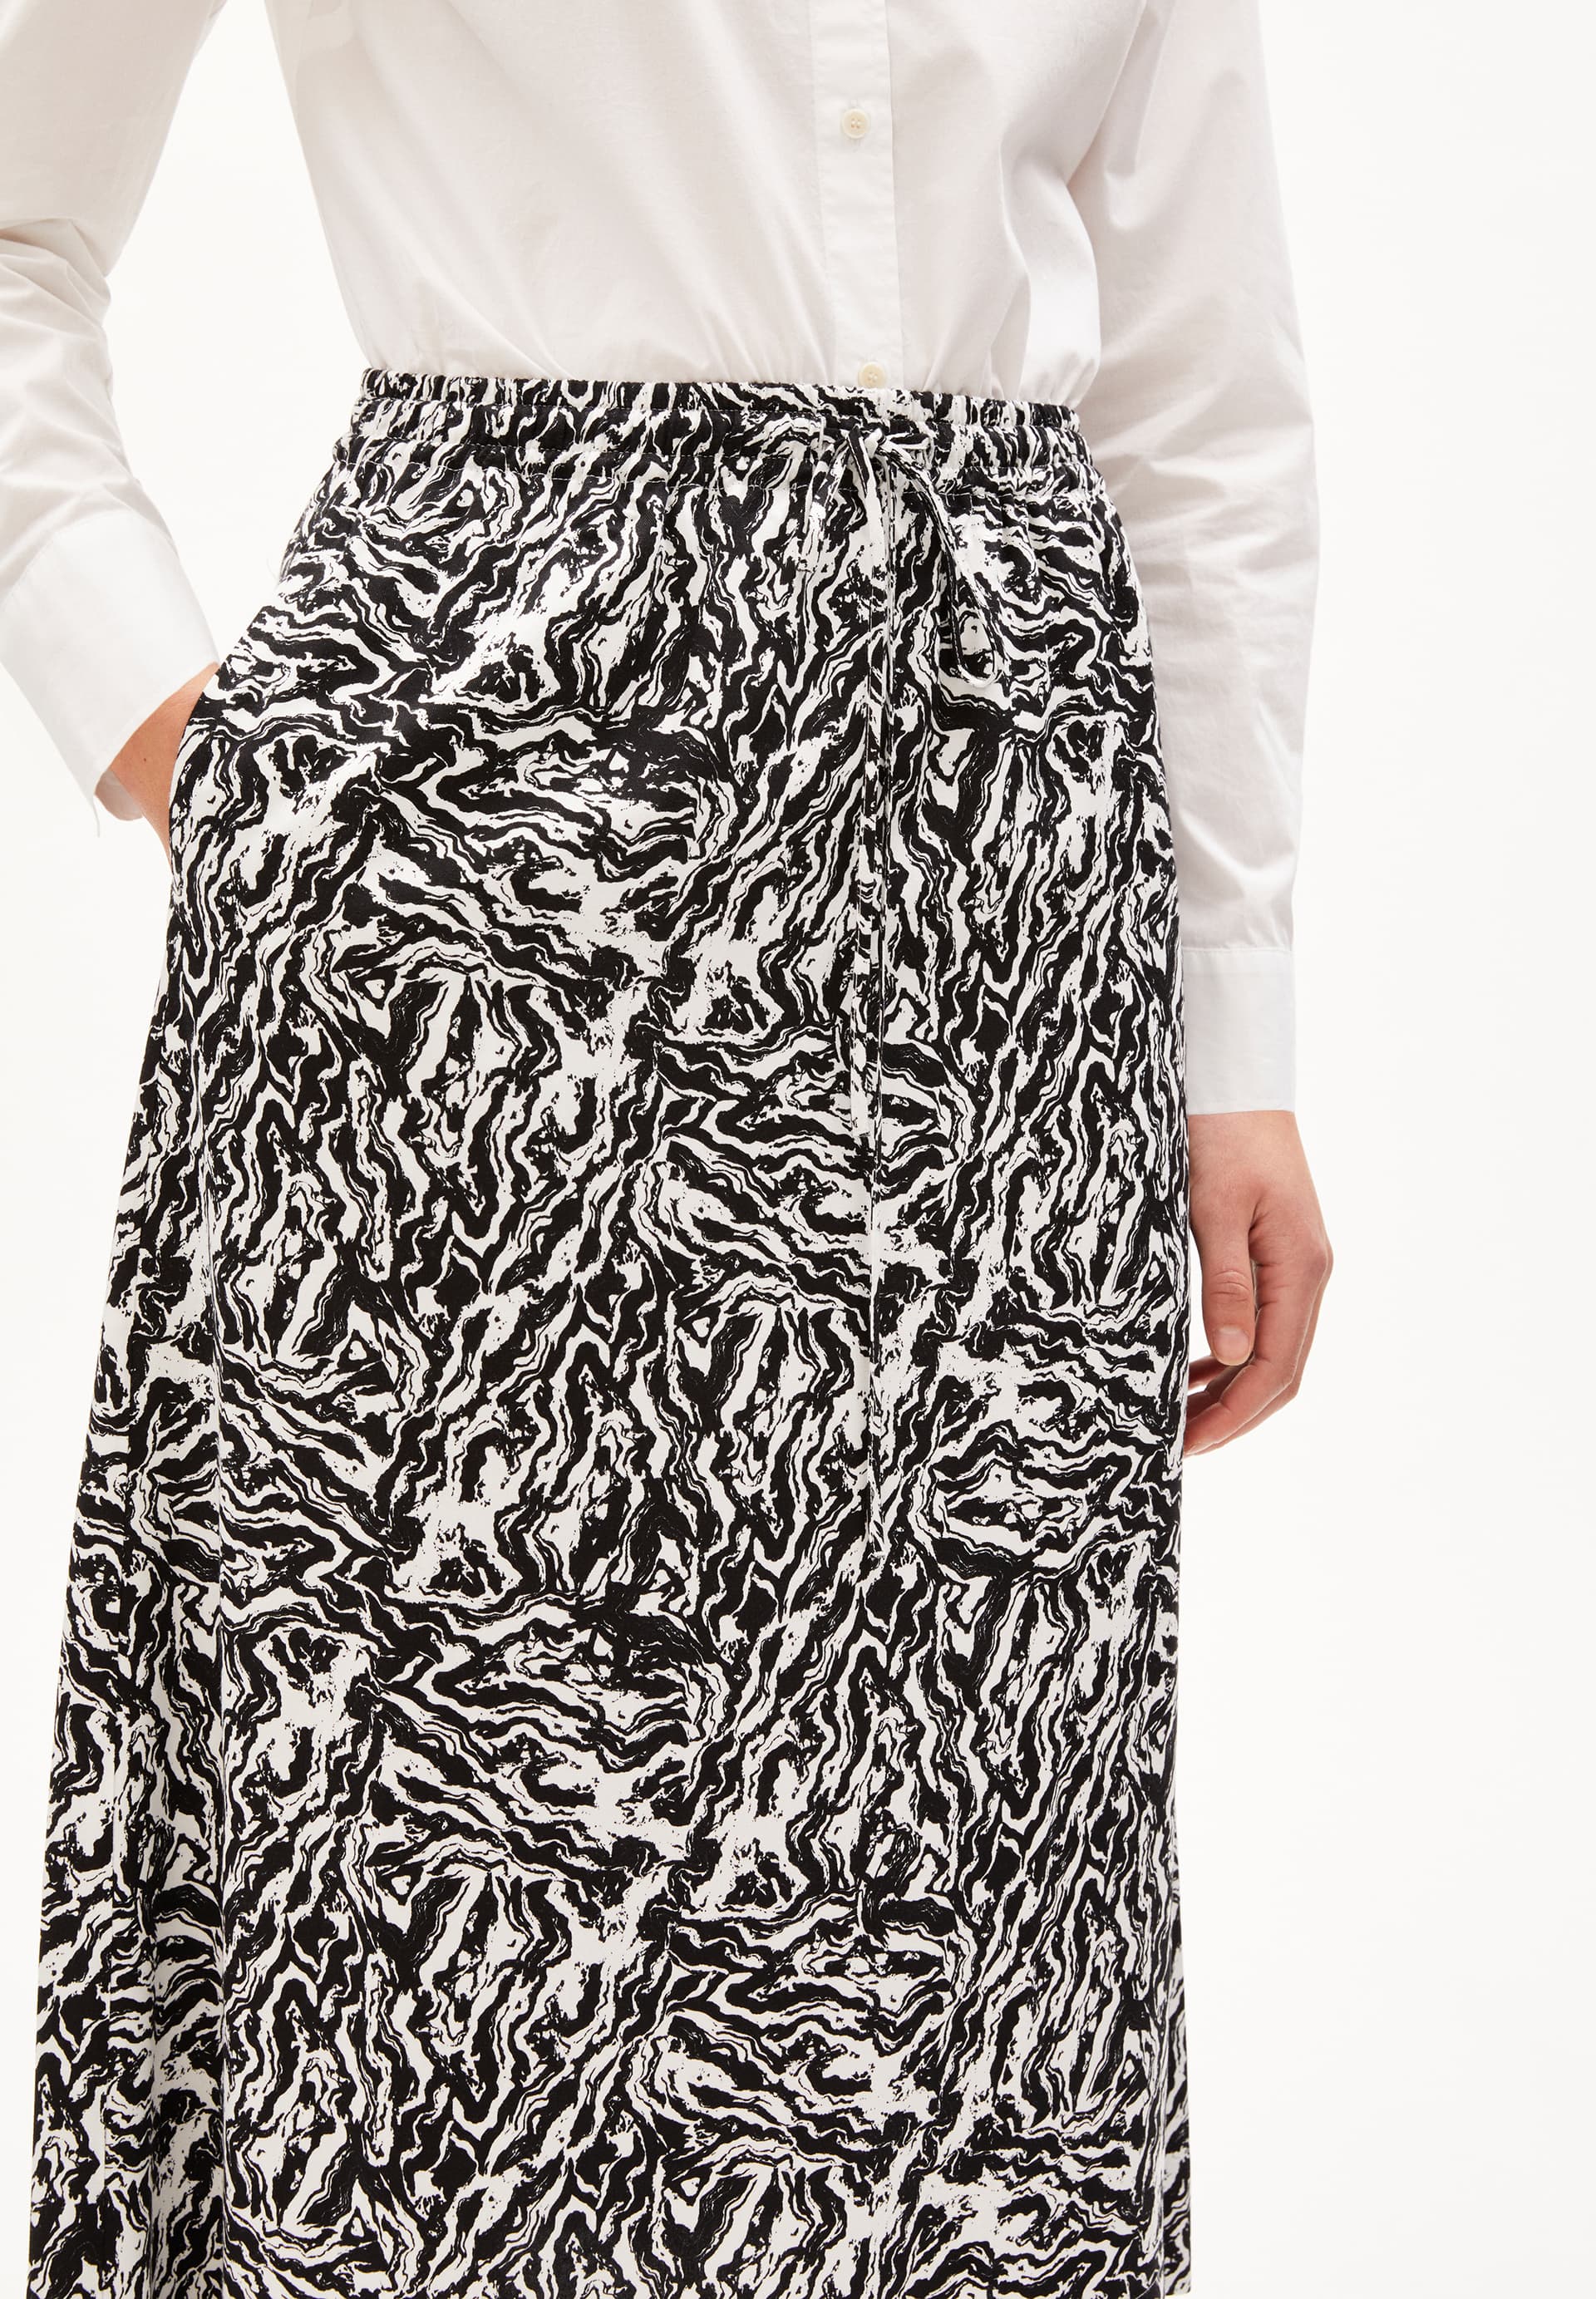 DARTIAA STONEY Woven Skirt Relaxed Fit made of LENZING™ ECOVERO™ Viscose